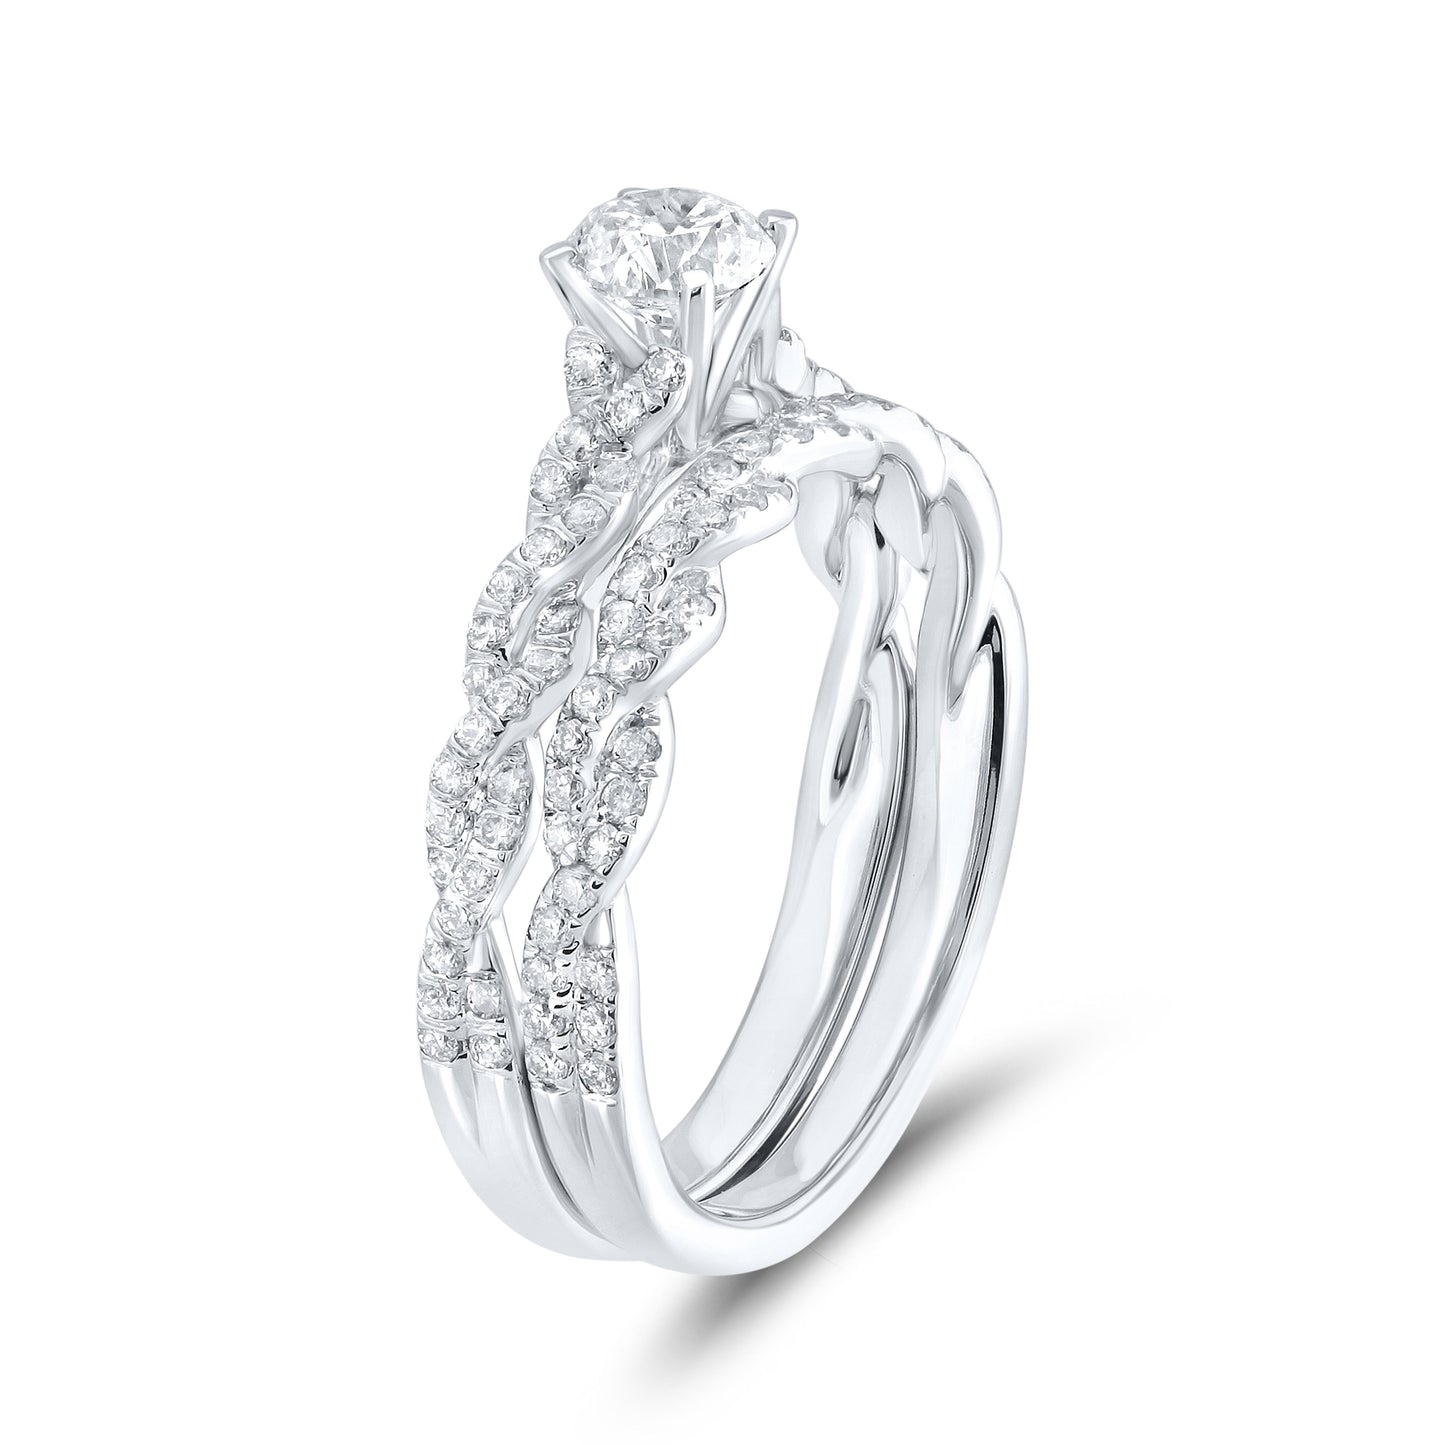 14k White Gold 1.05 CTW Natural Diamond Bridal Ring Set